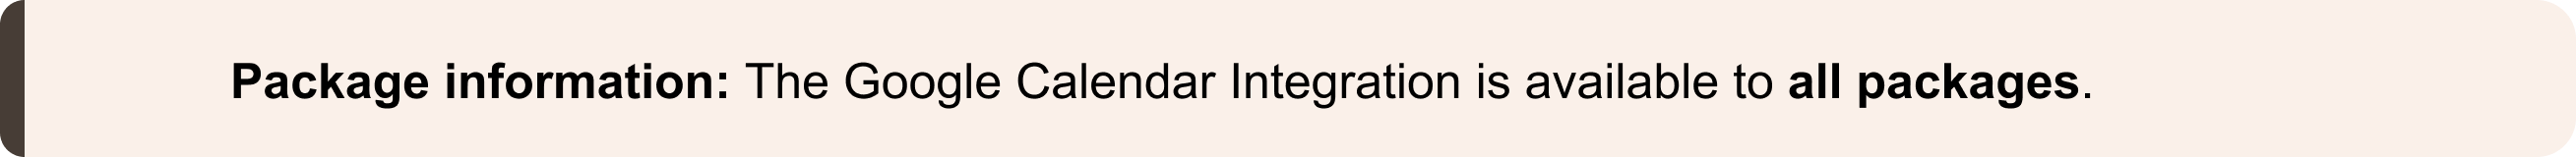 Google_Calendar_Integration_1.png